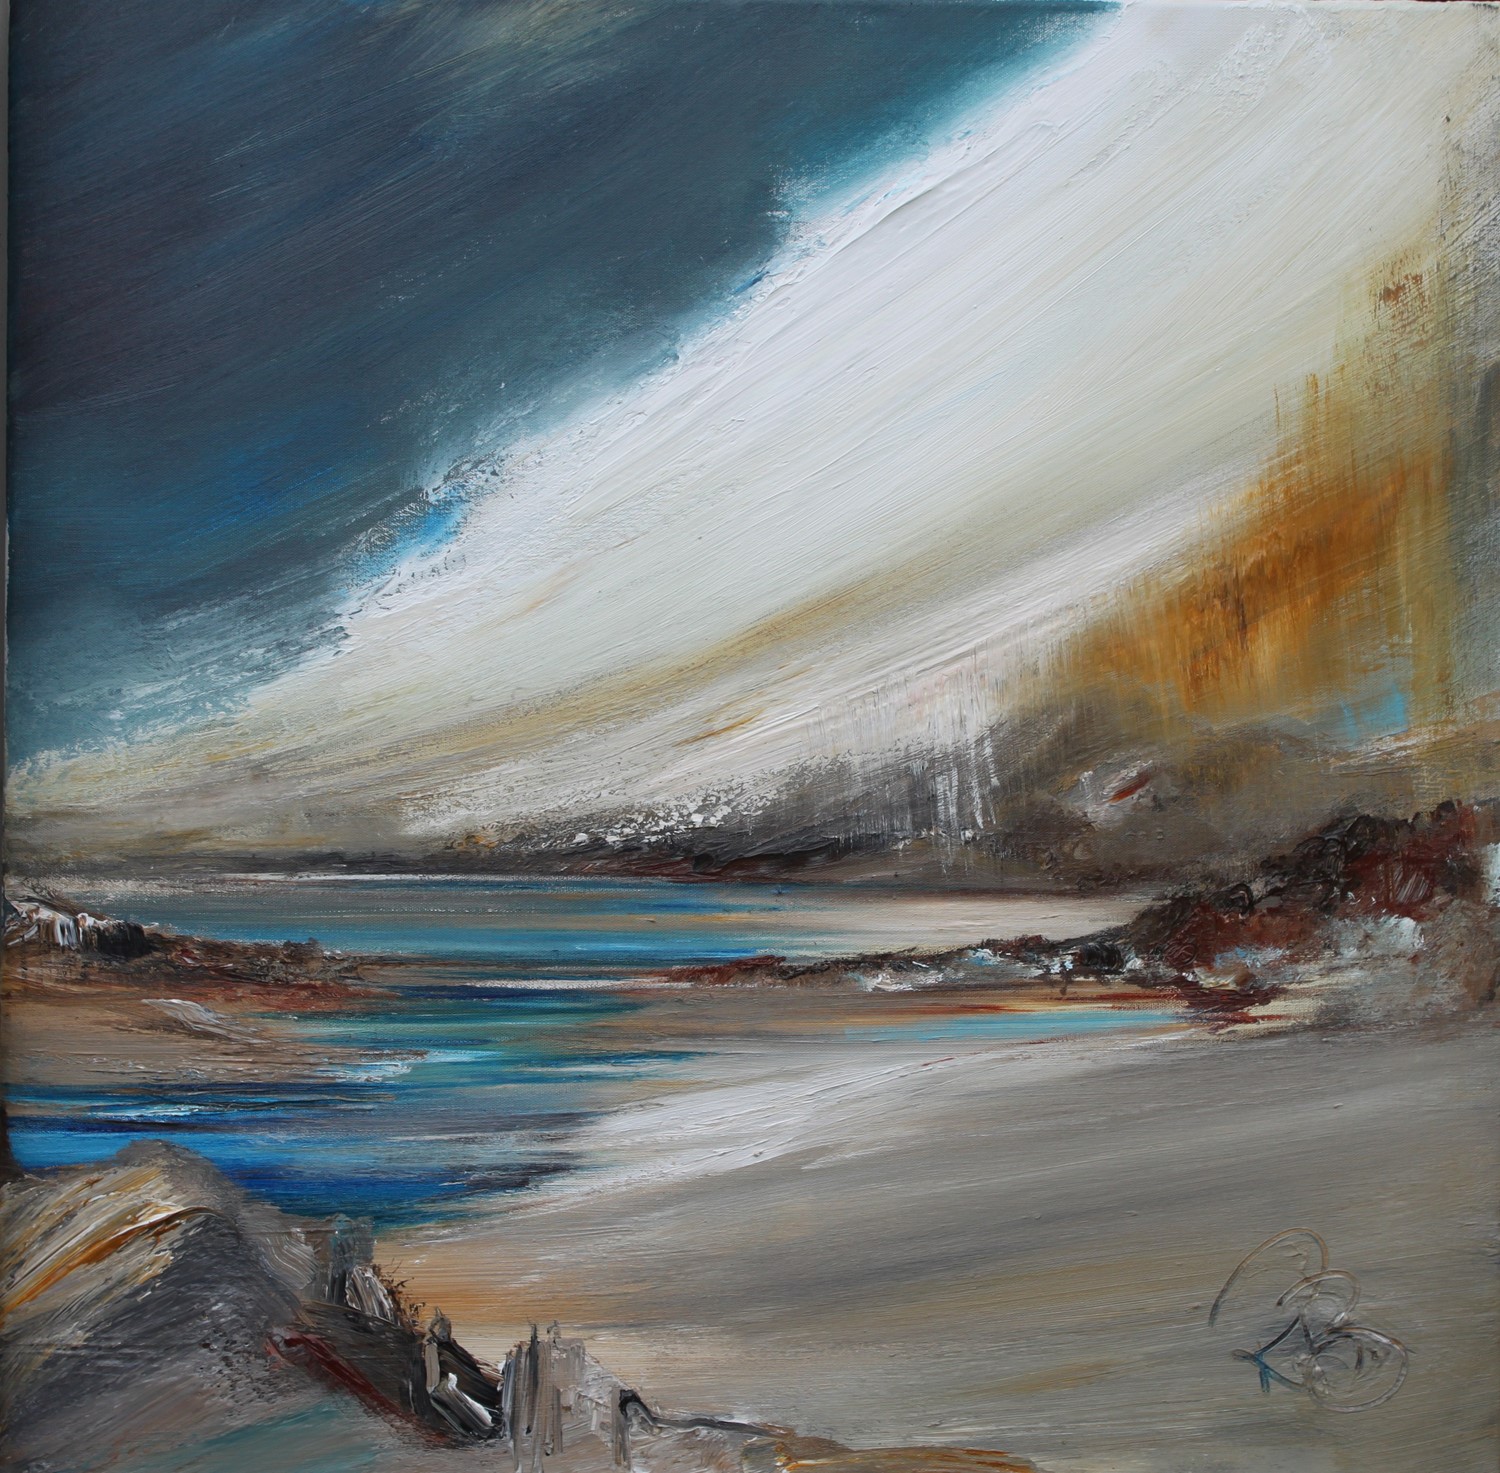 'Sea River' by artist Rosanne Barr